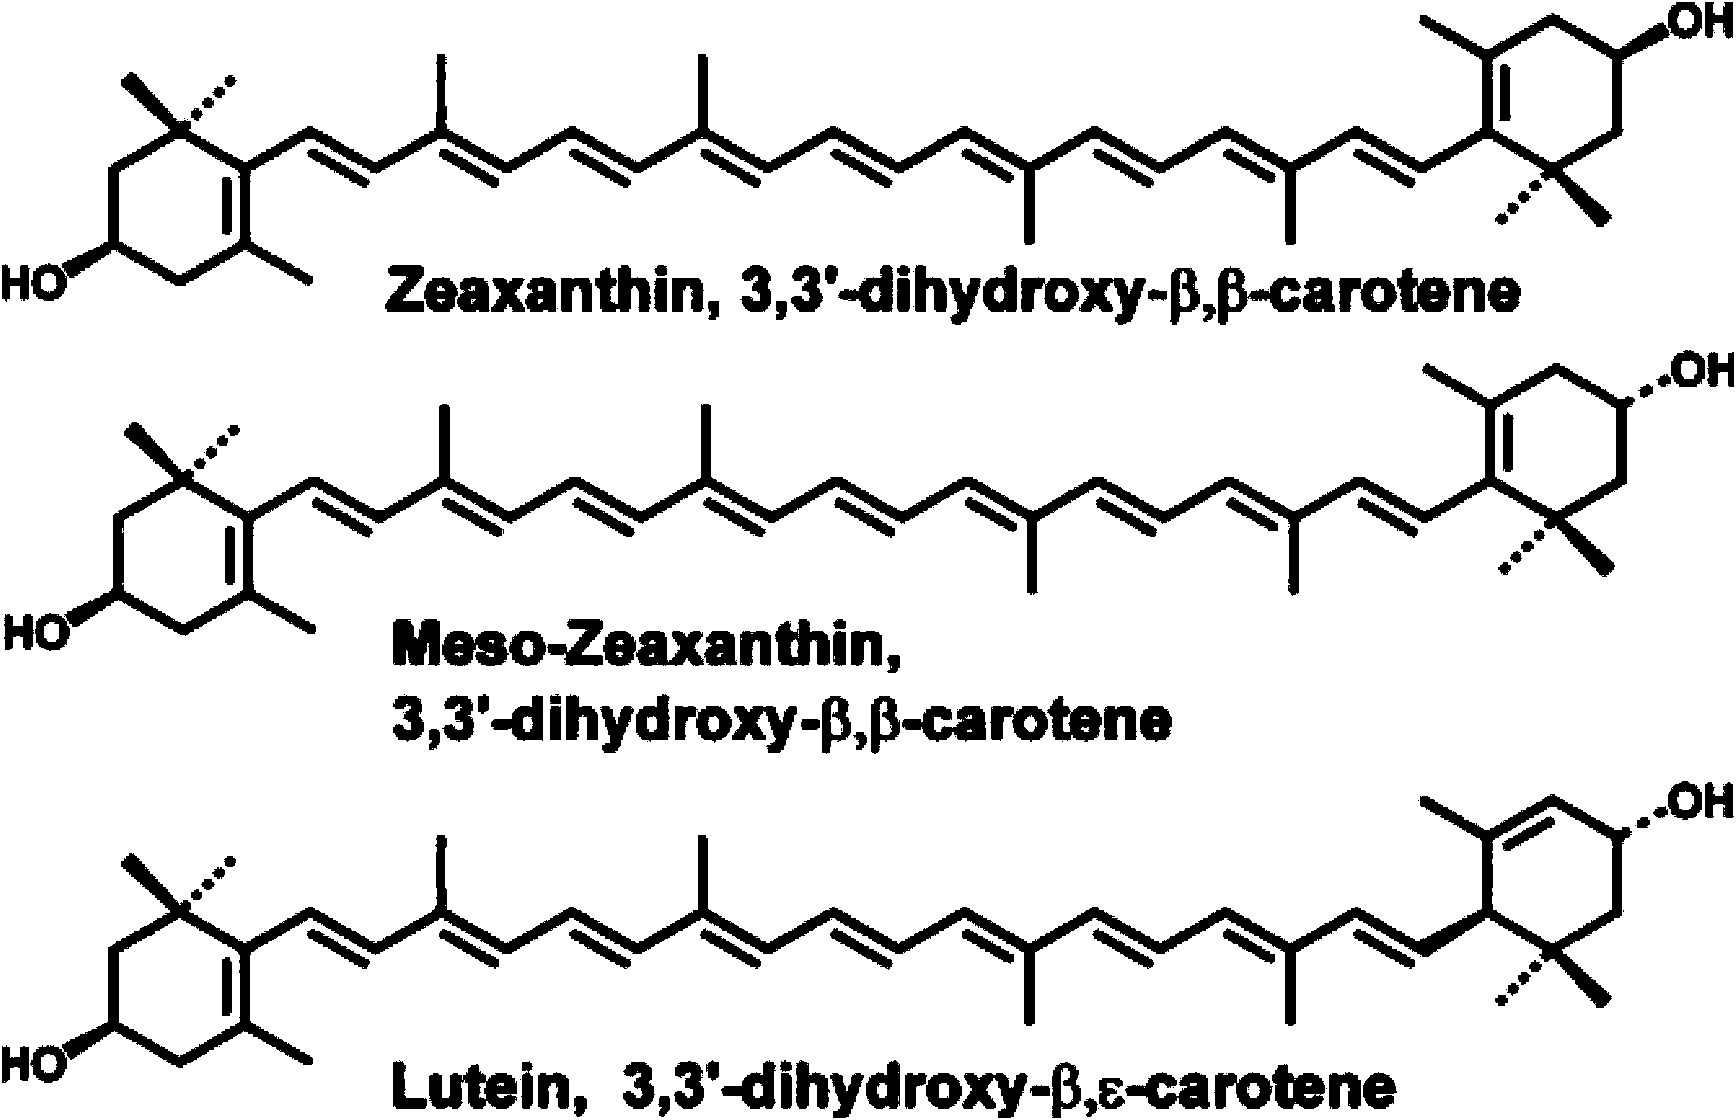 Method for extracting zeaxanthine from physalis alkekengi and fruits through one-pot method